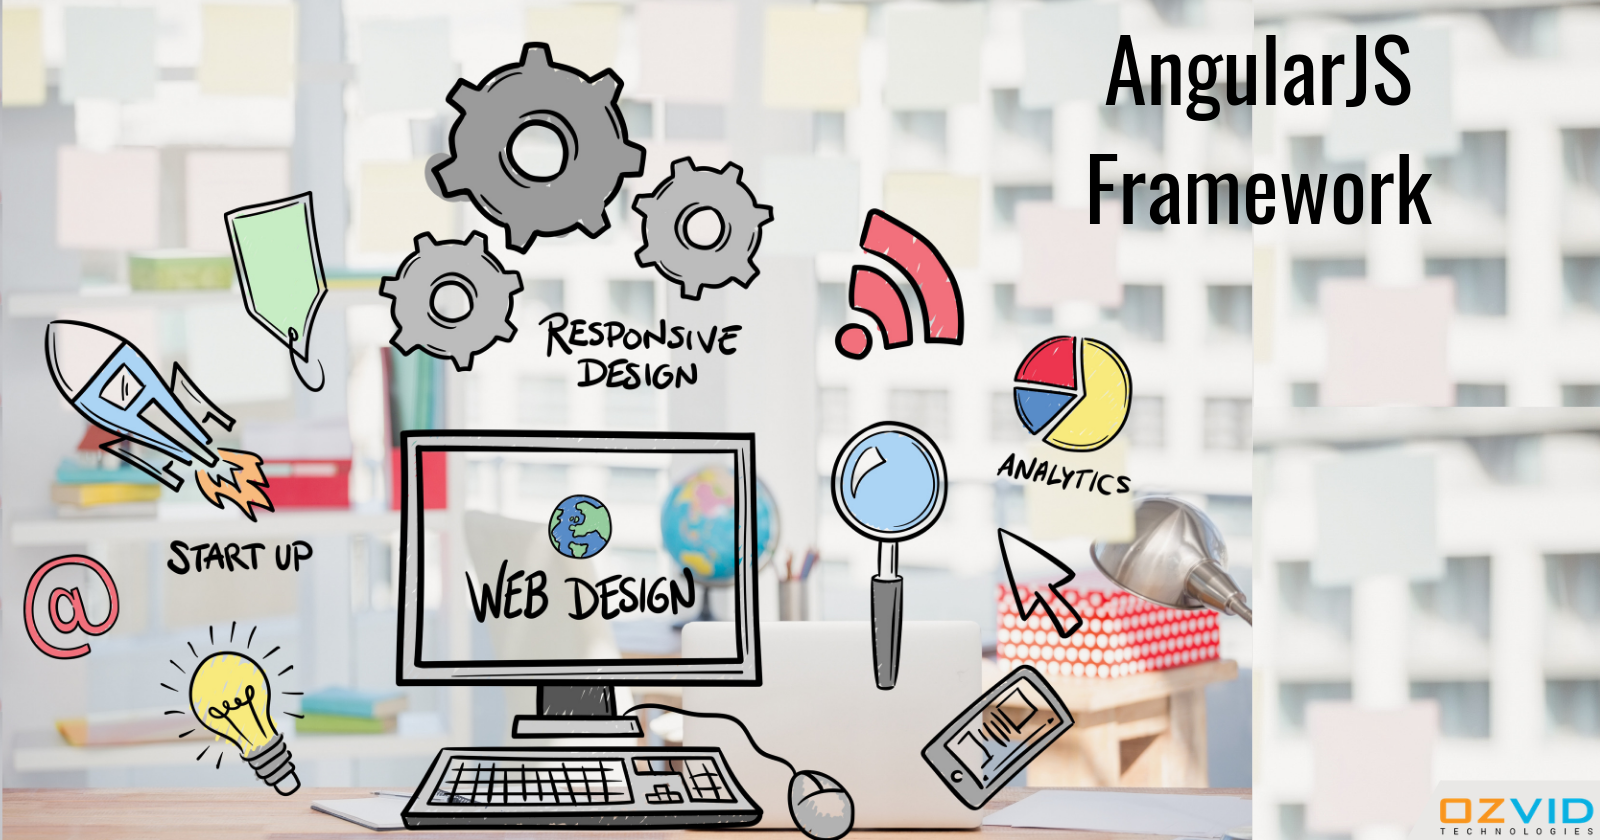 AngularJS Framework: The Most Popular Web Development Framework